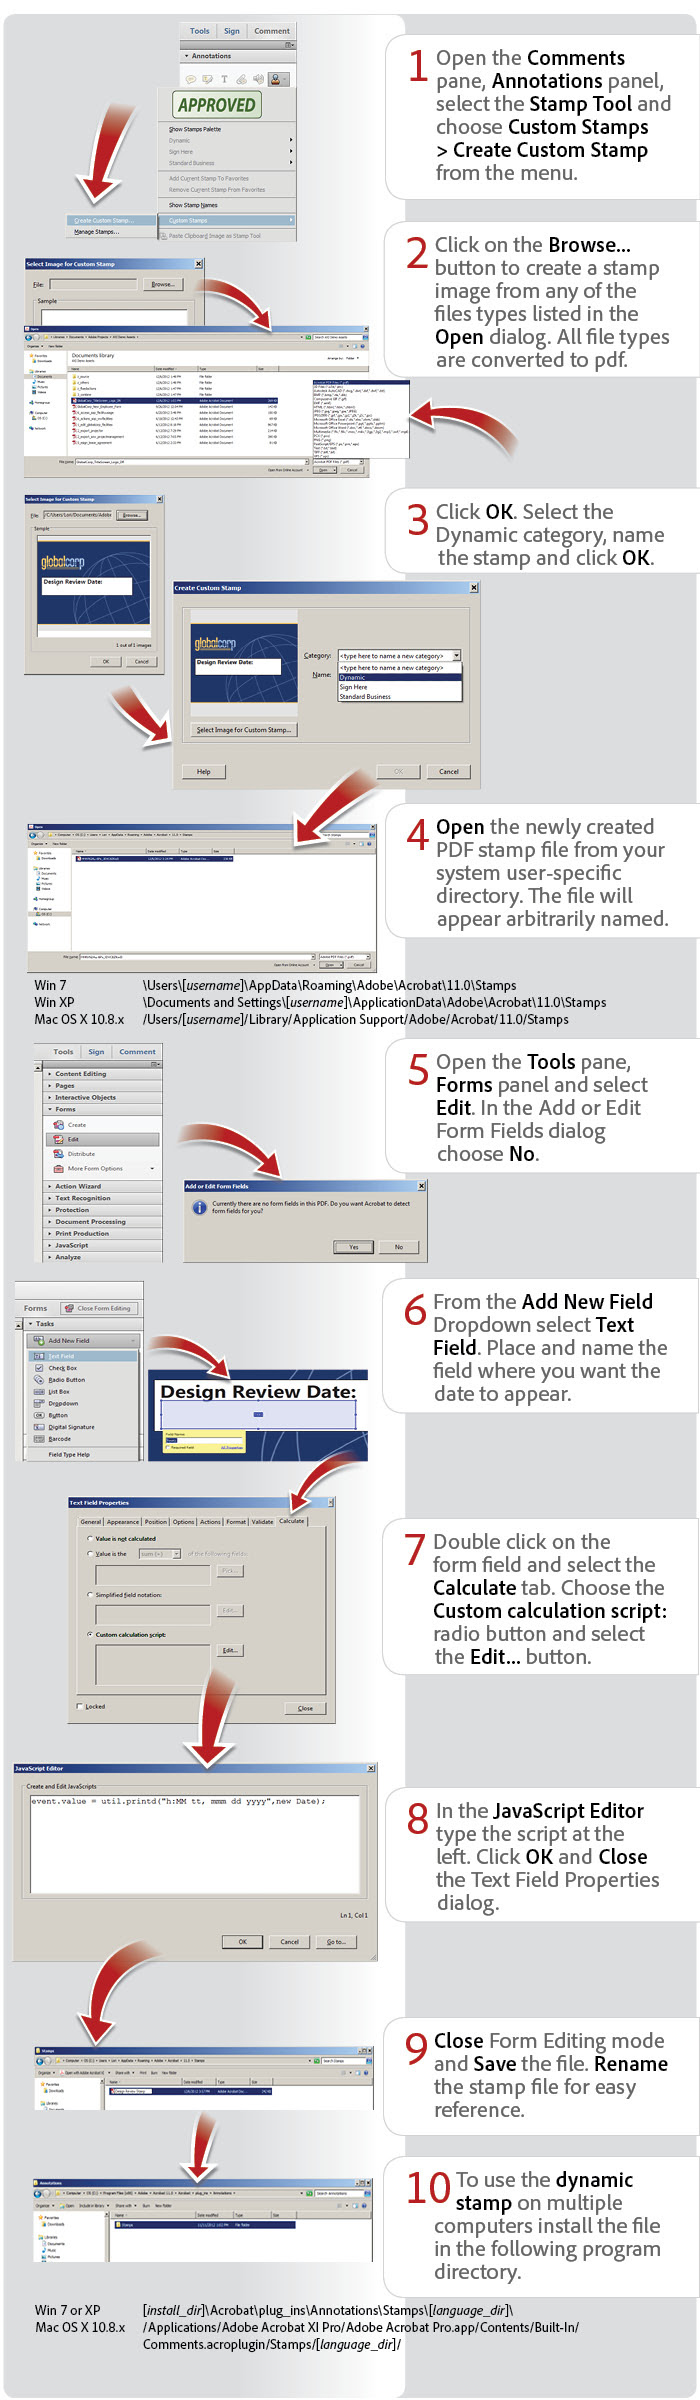 Creating a Custom Dynamic Stamp Adobe Support Community 4789162